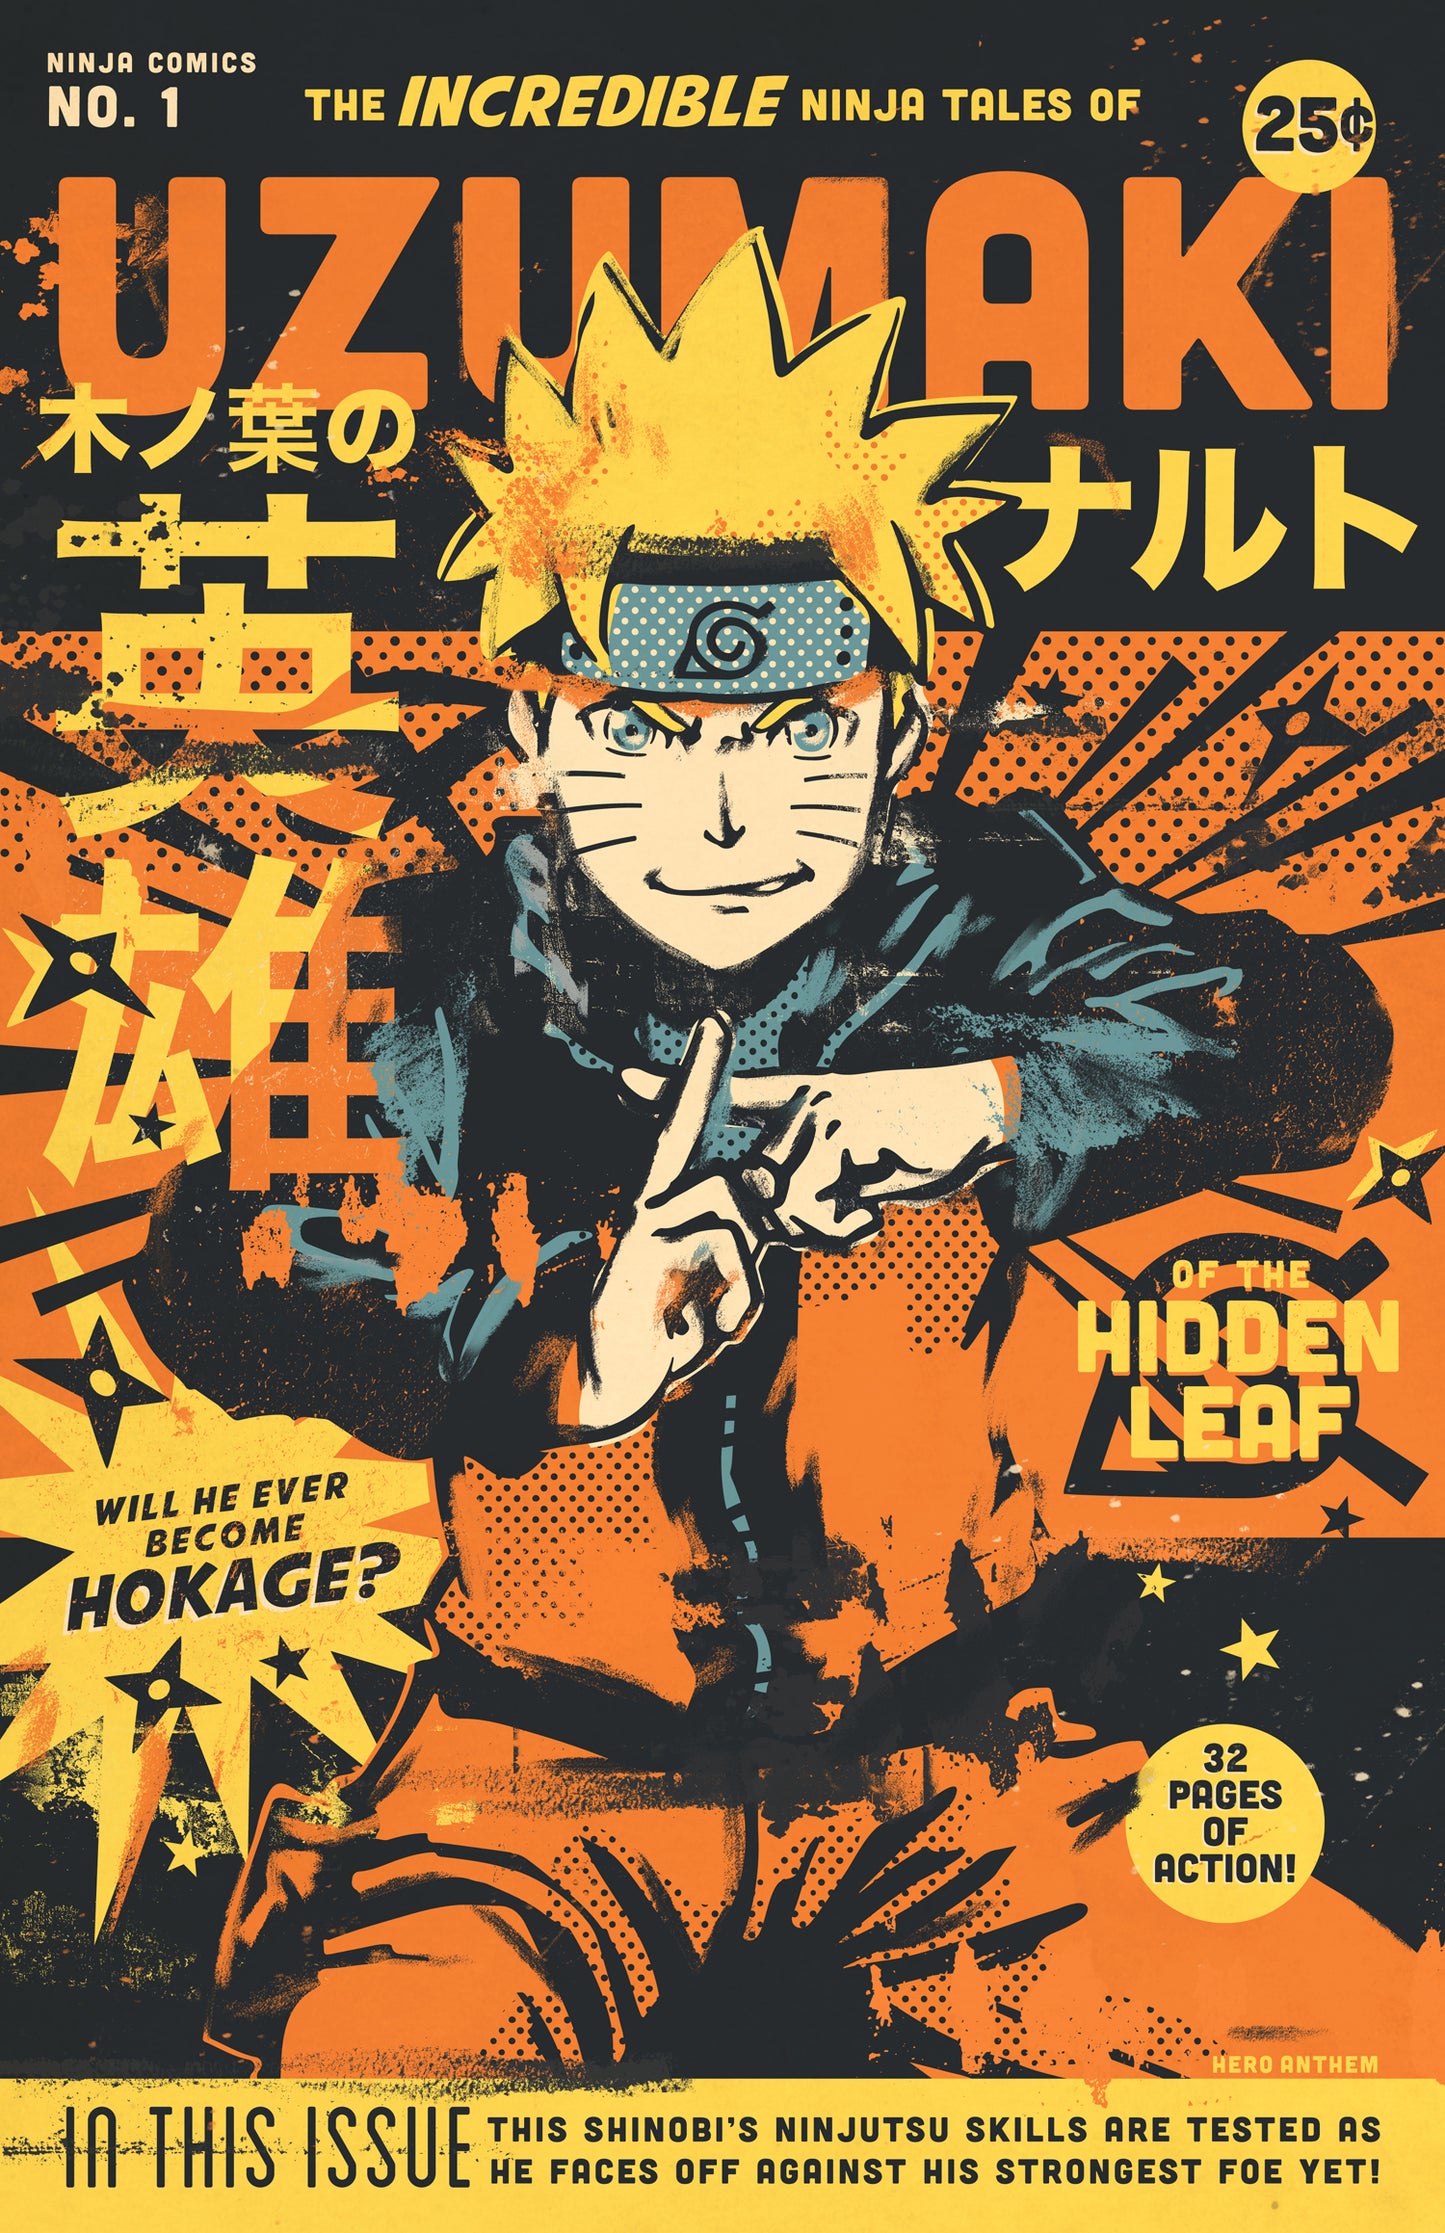 Naruto Fanfiction: The Epic Voyage of the Hokage (VOL.5) ebook by One Pomp  - Rakuten Kobo